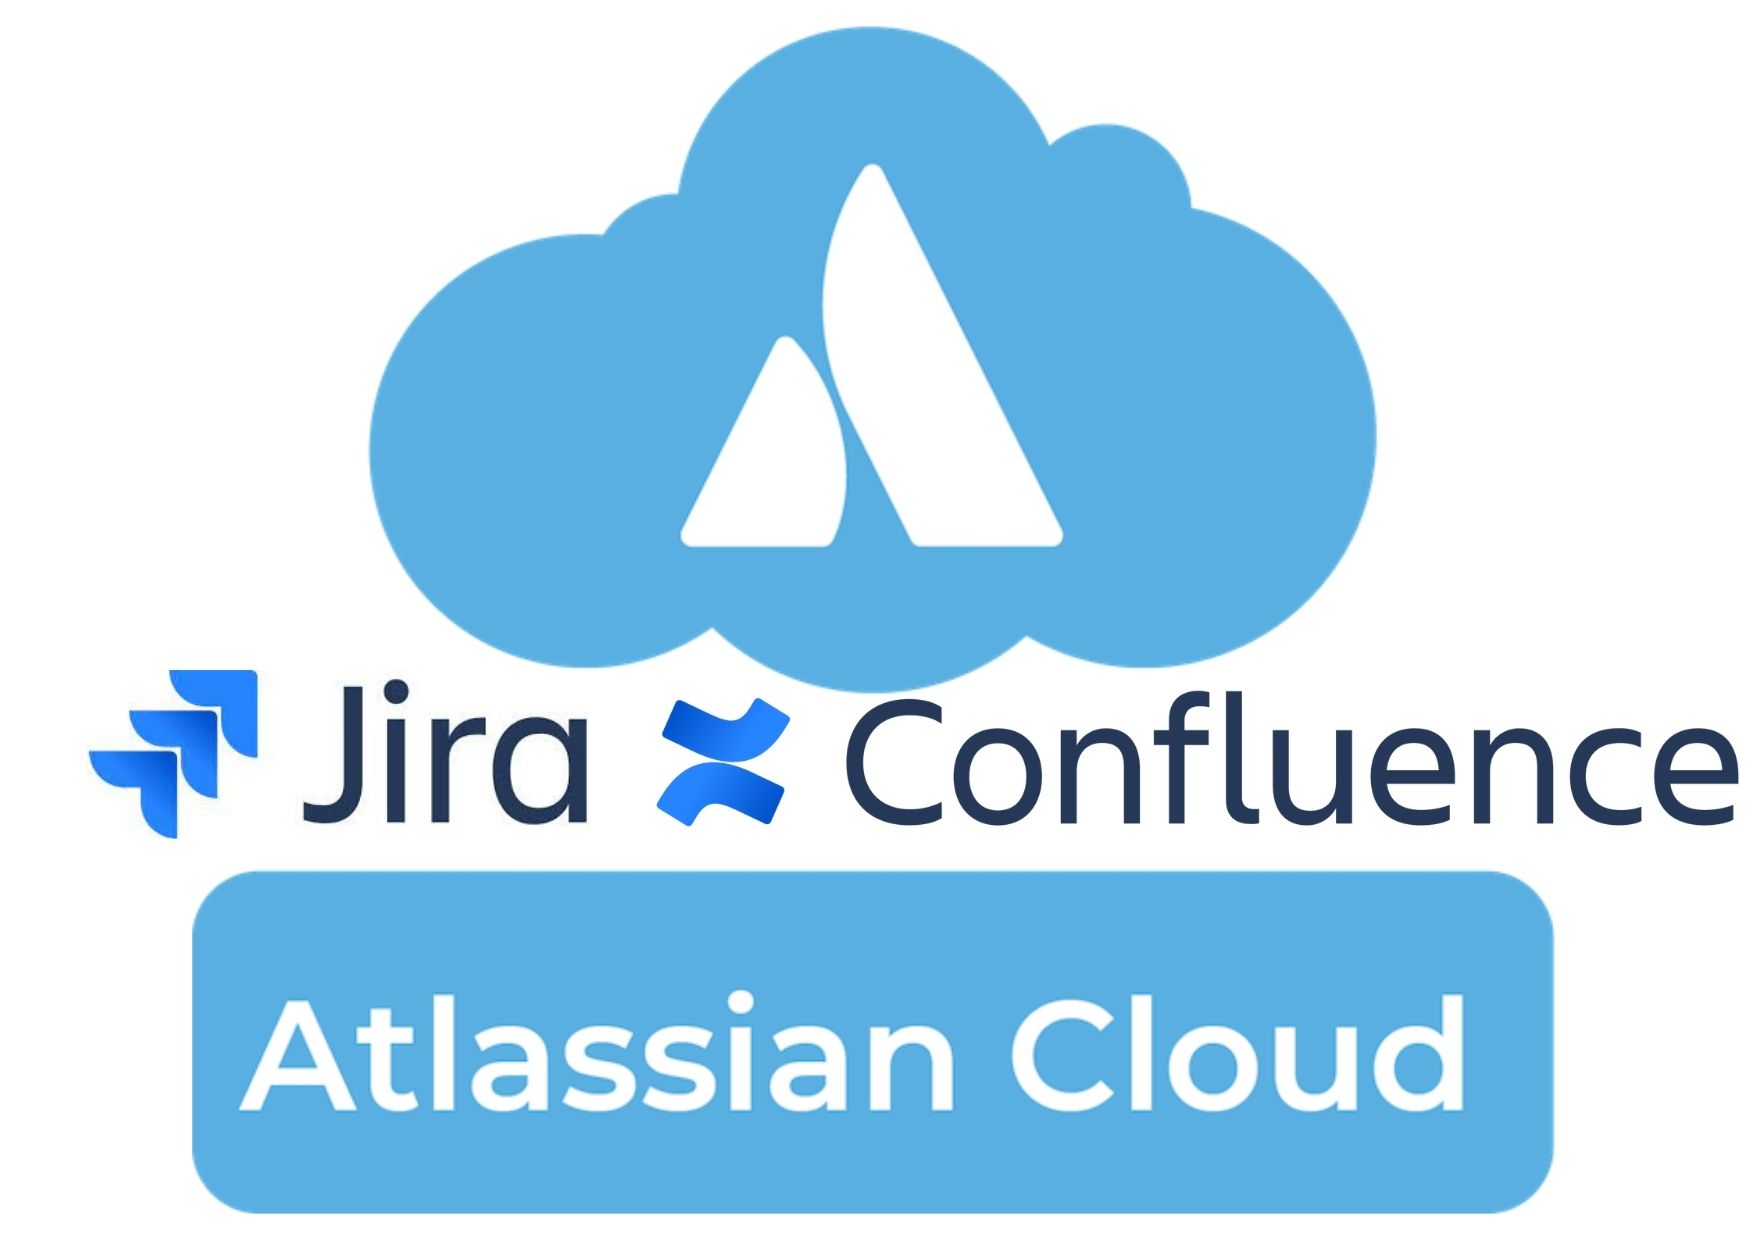 Atlassian Confluence E Jira Cloud 4 Webinar Gratuiti Per Scoprirli Insieme Sviluppo Software Enterprise Atlassian Herzum Italia